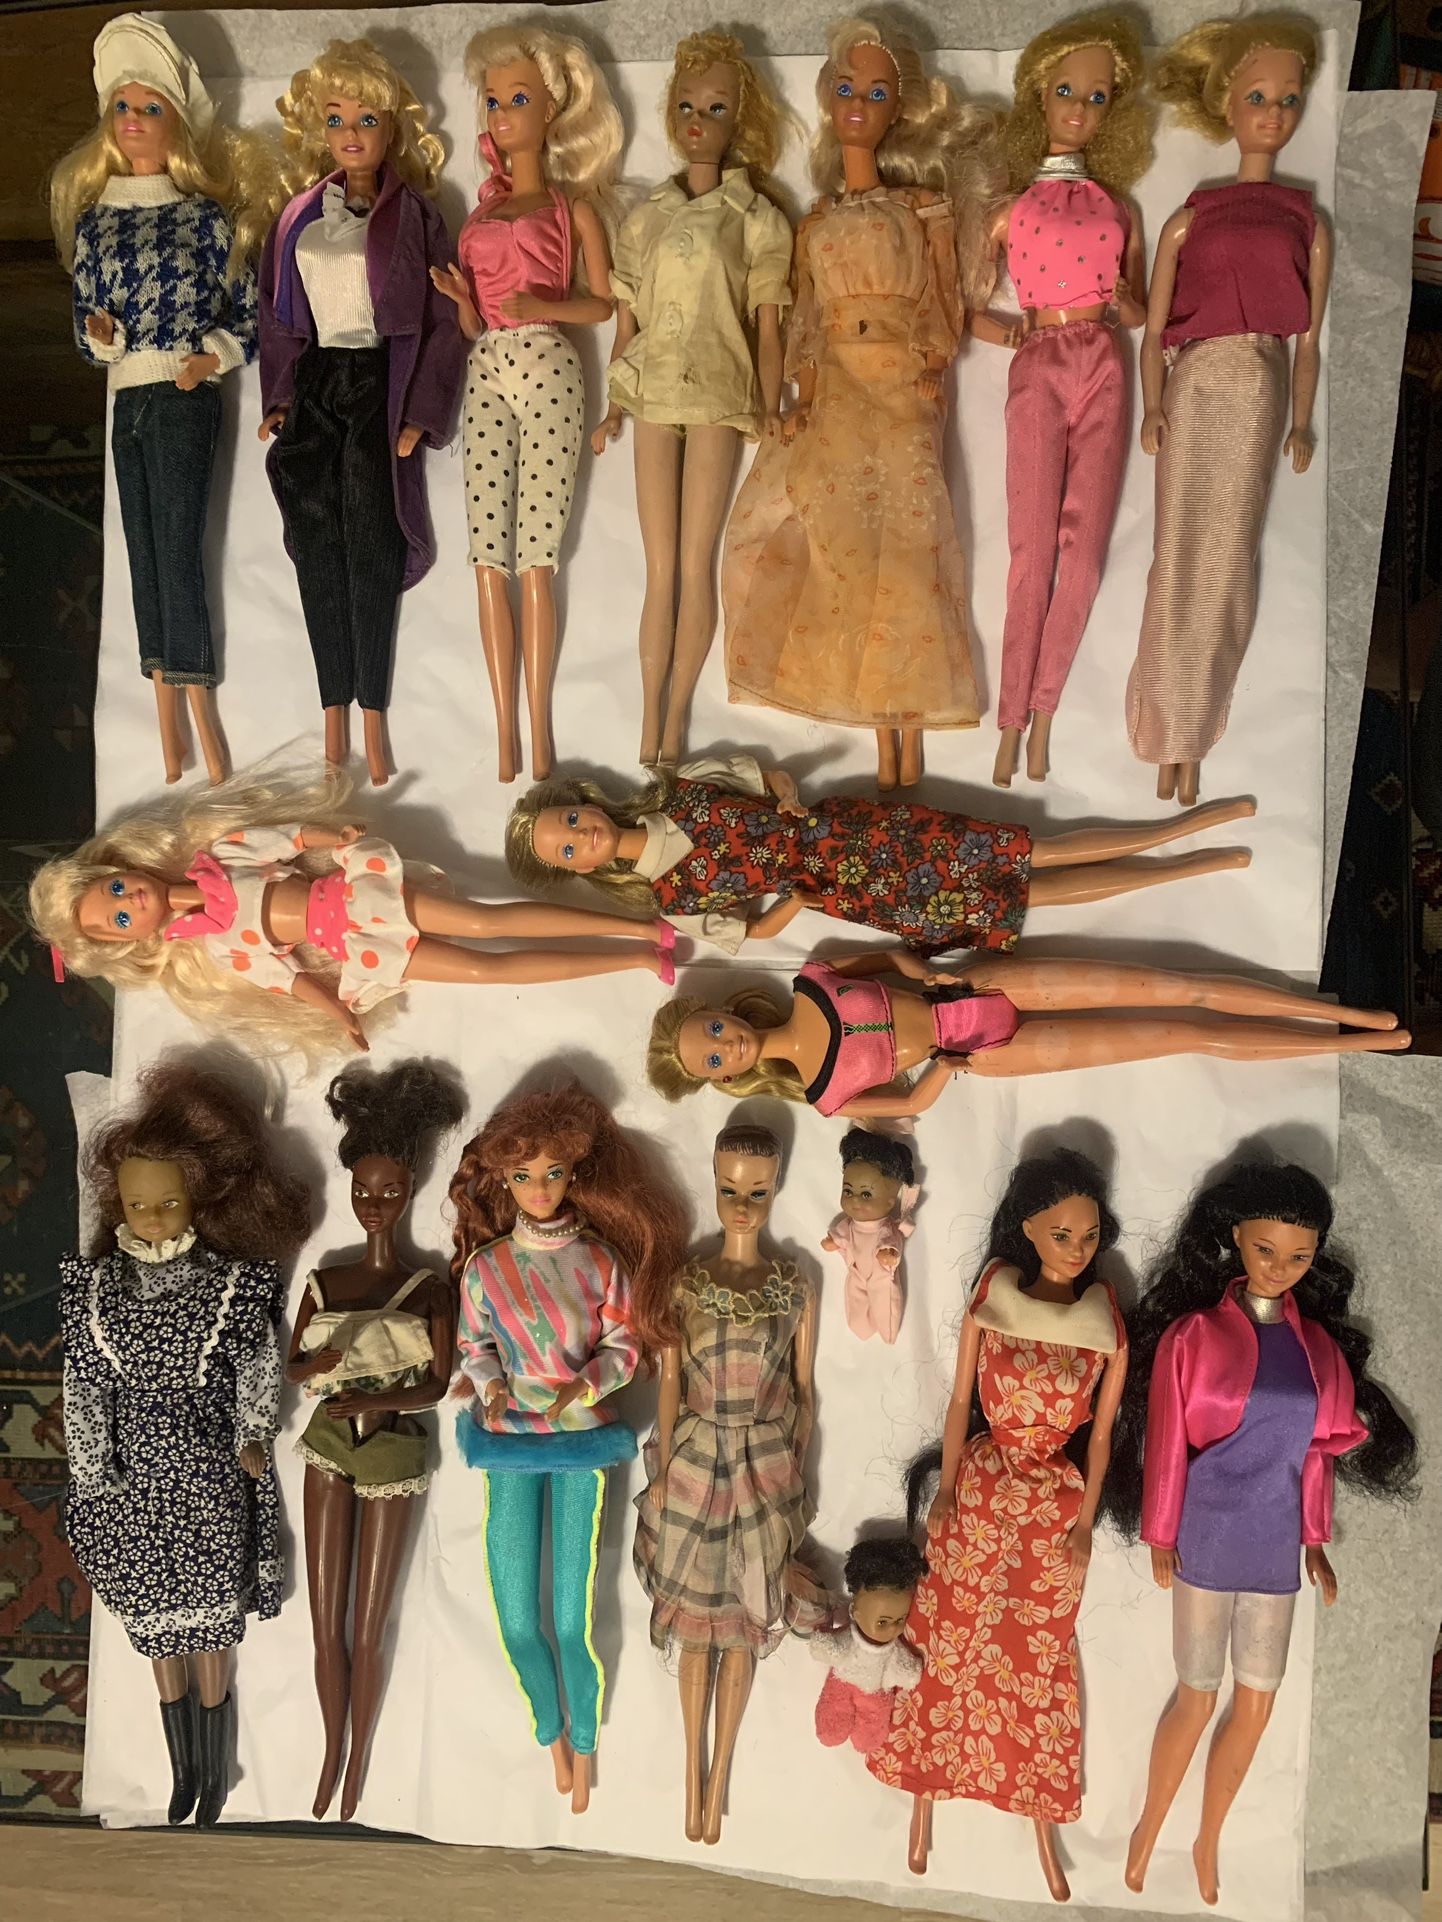 Barbie & Ken Dolls, Clothing, Furniture & Accessories 